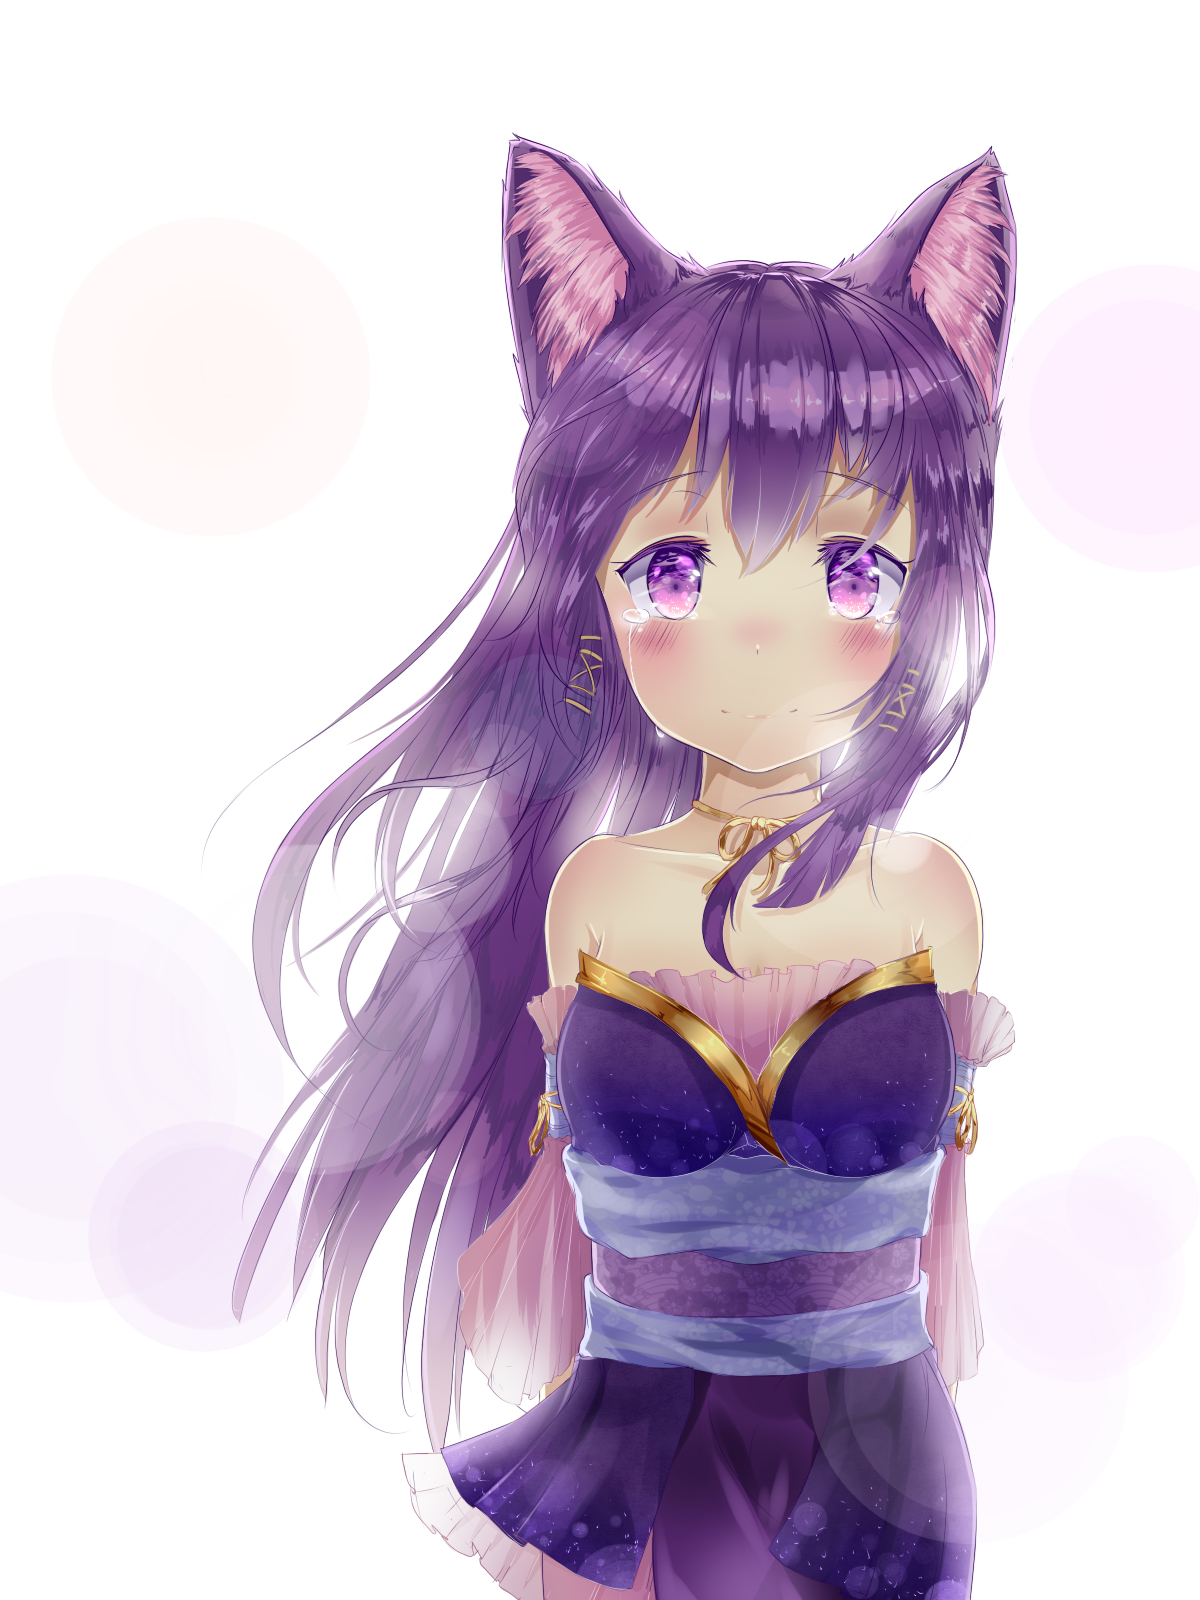 anime girl with purple hair and yellow ears